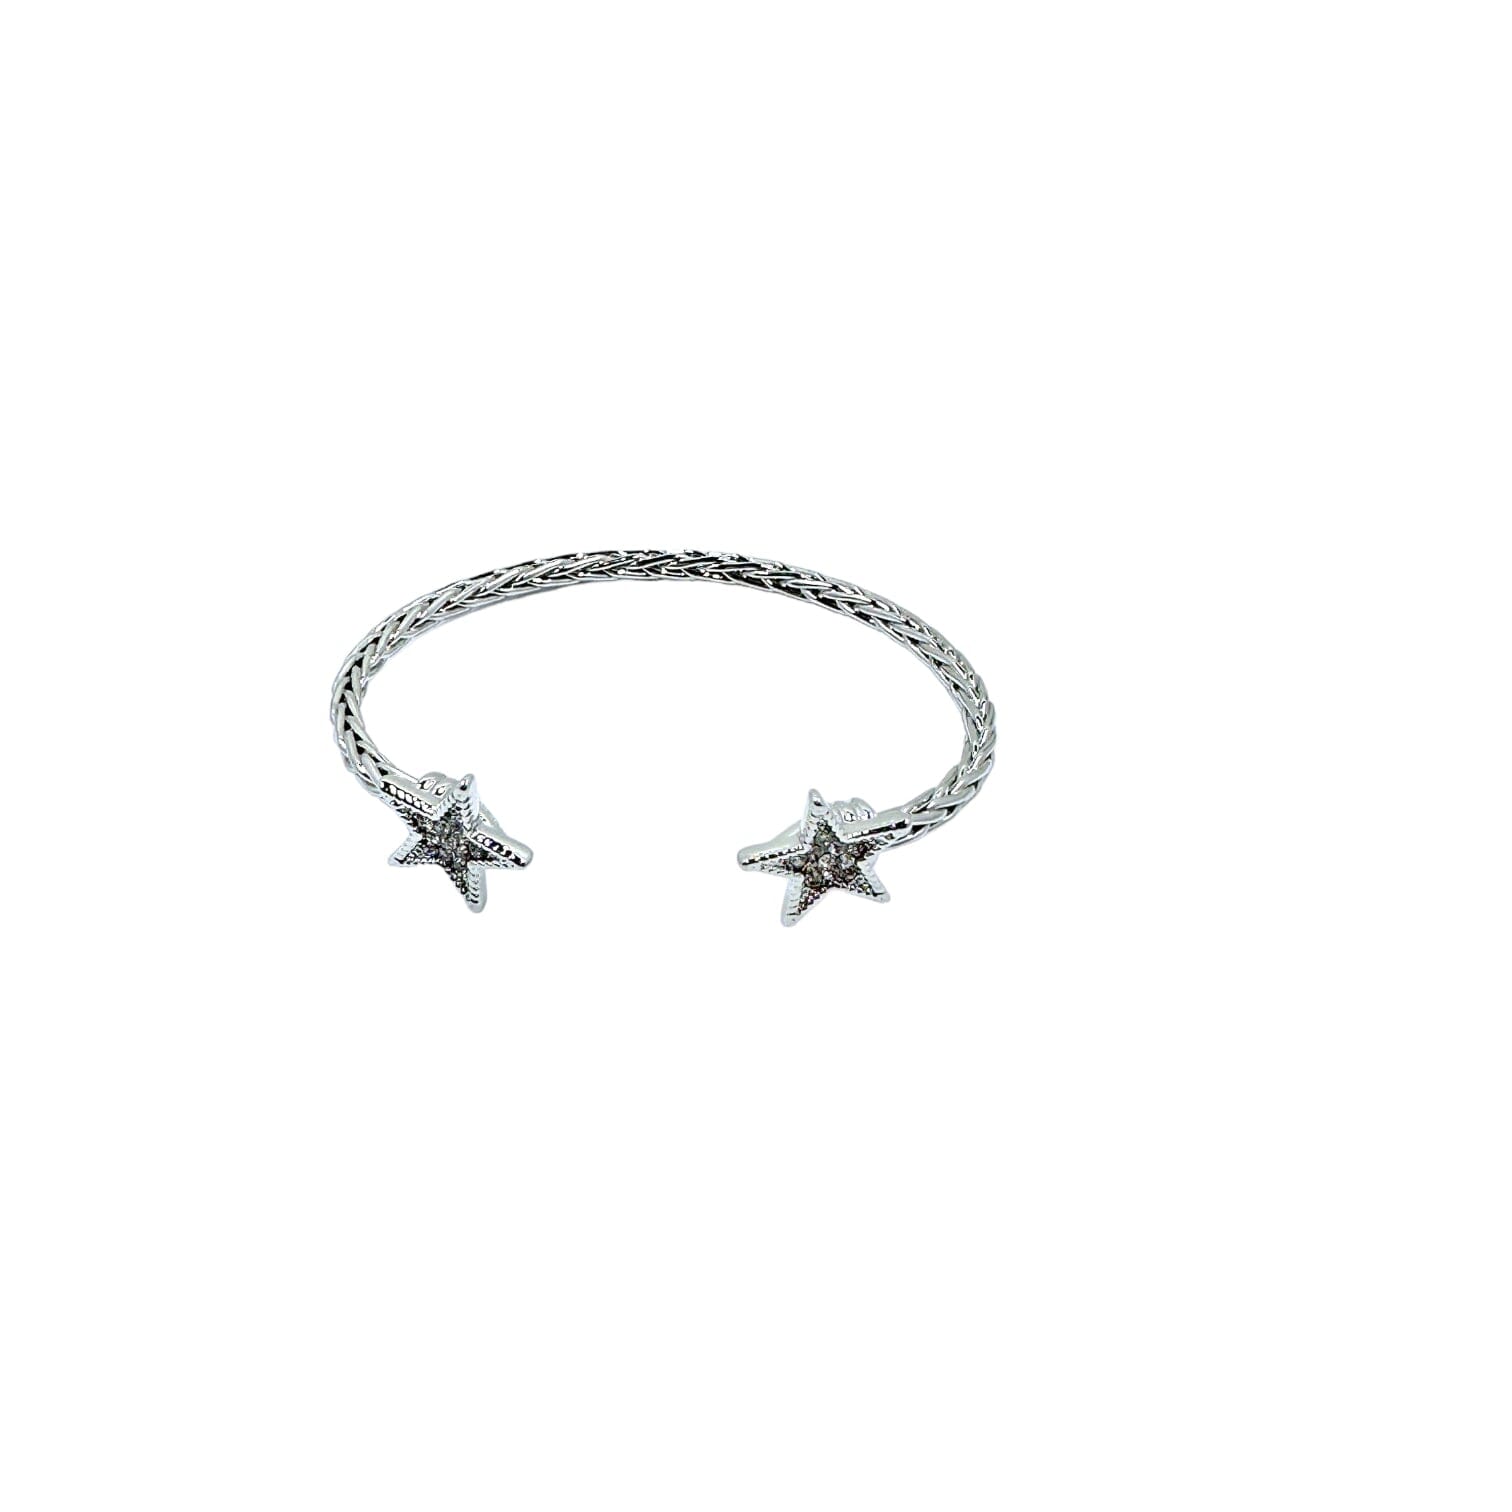 Alice Star Braided Cable Bracelet Bracelets TRENDZIO Silver 